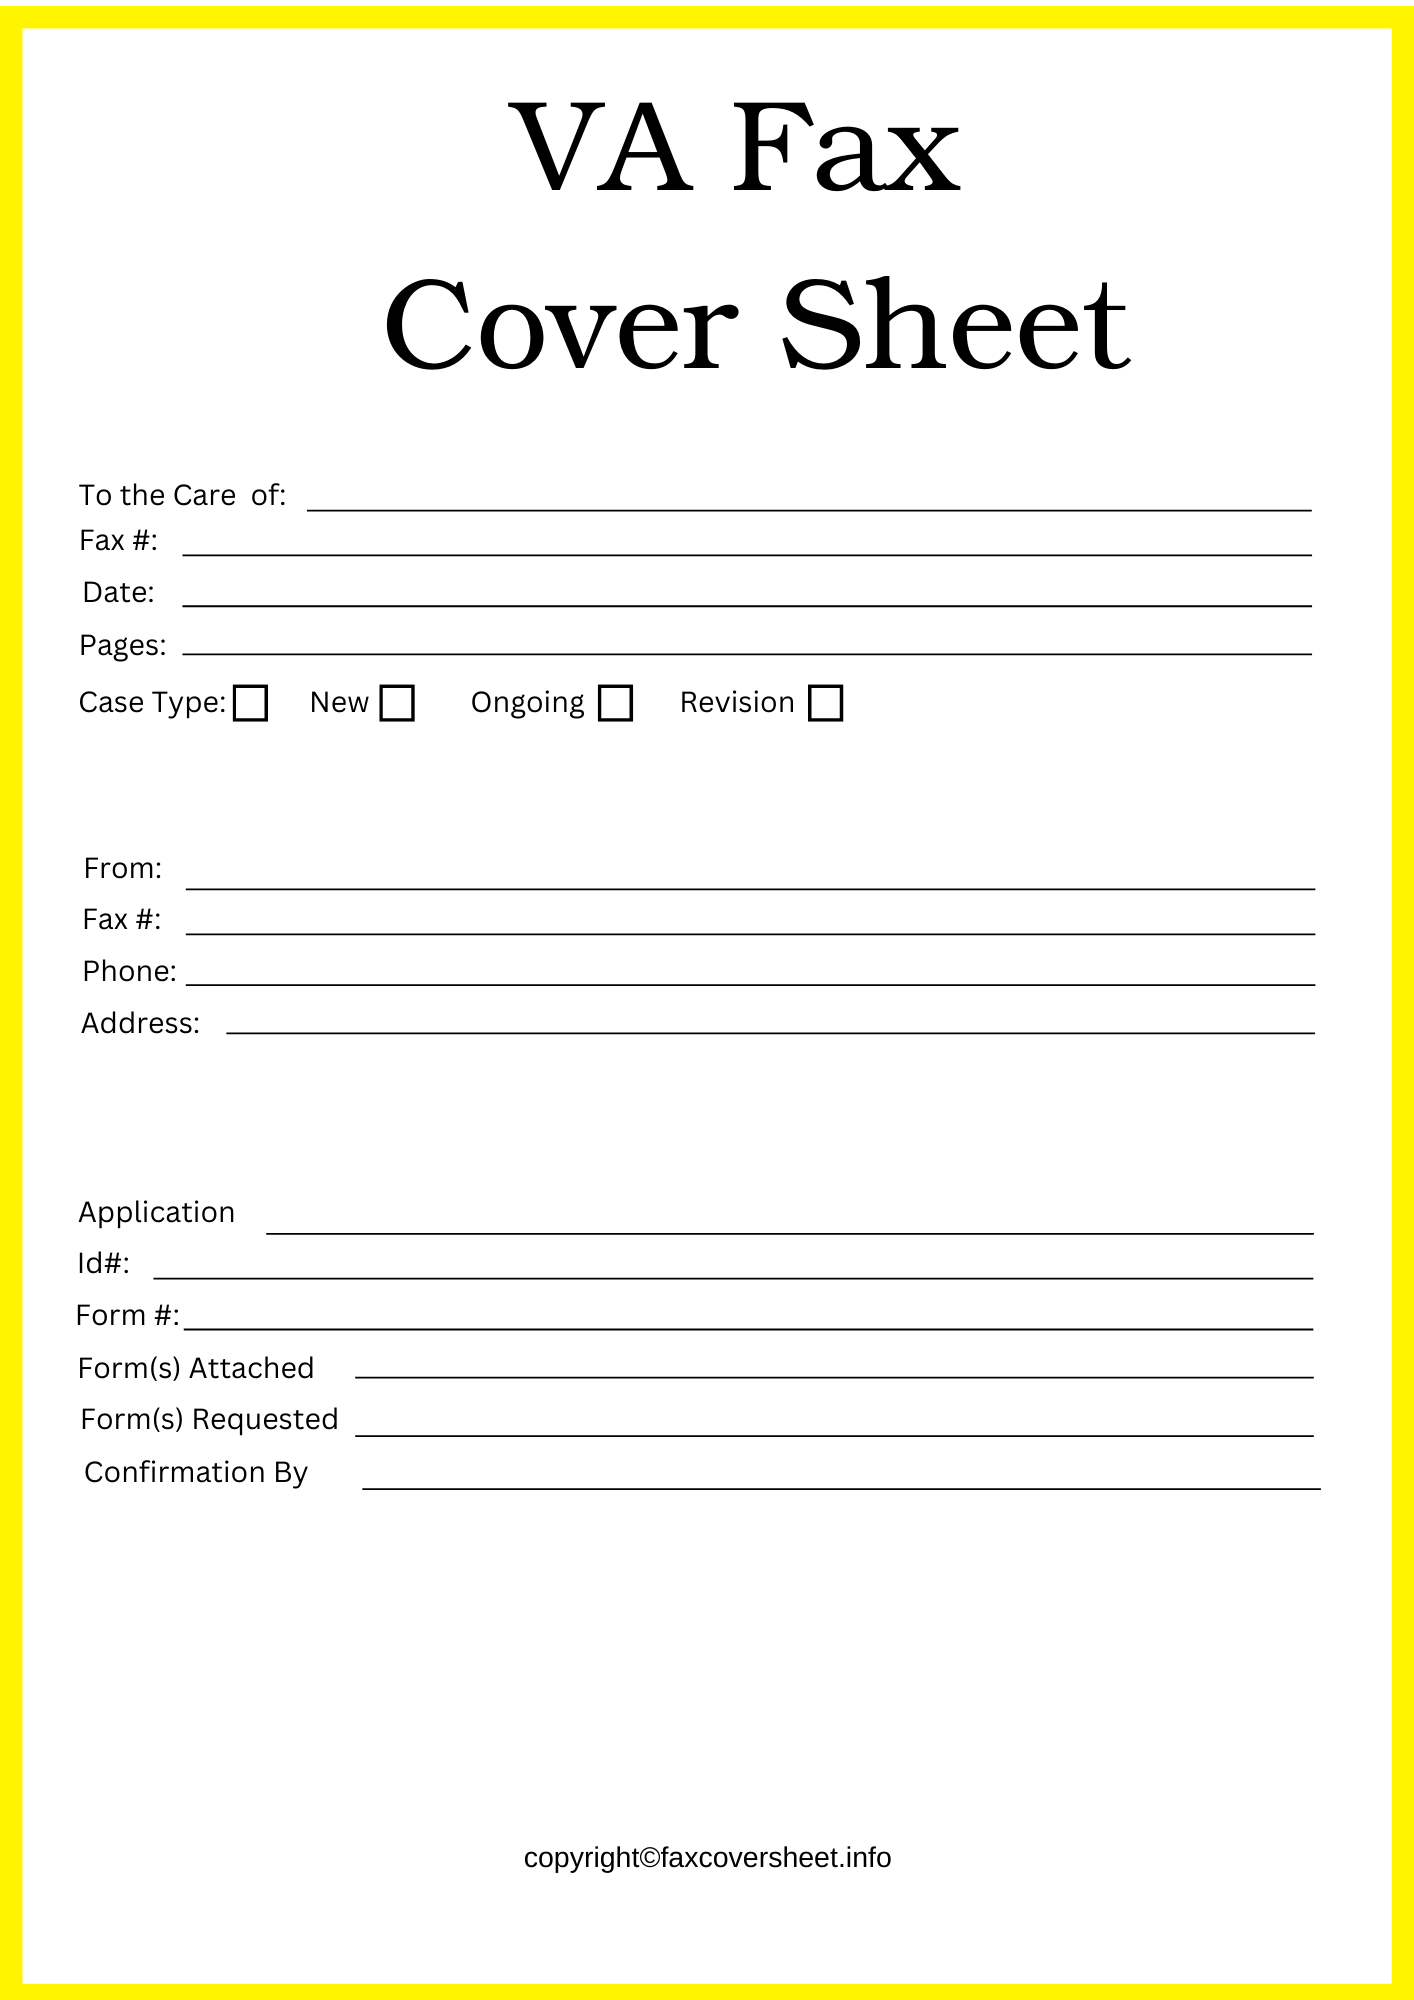 Veterans Affairs Evidence Intake Center Fax Cover Sheet